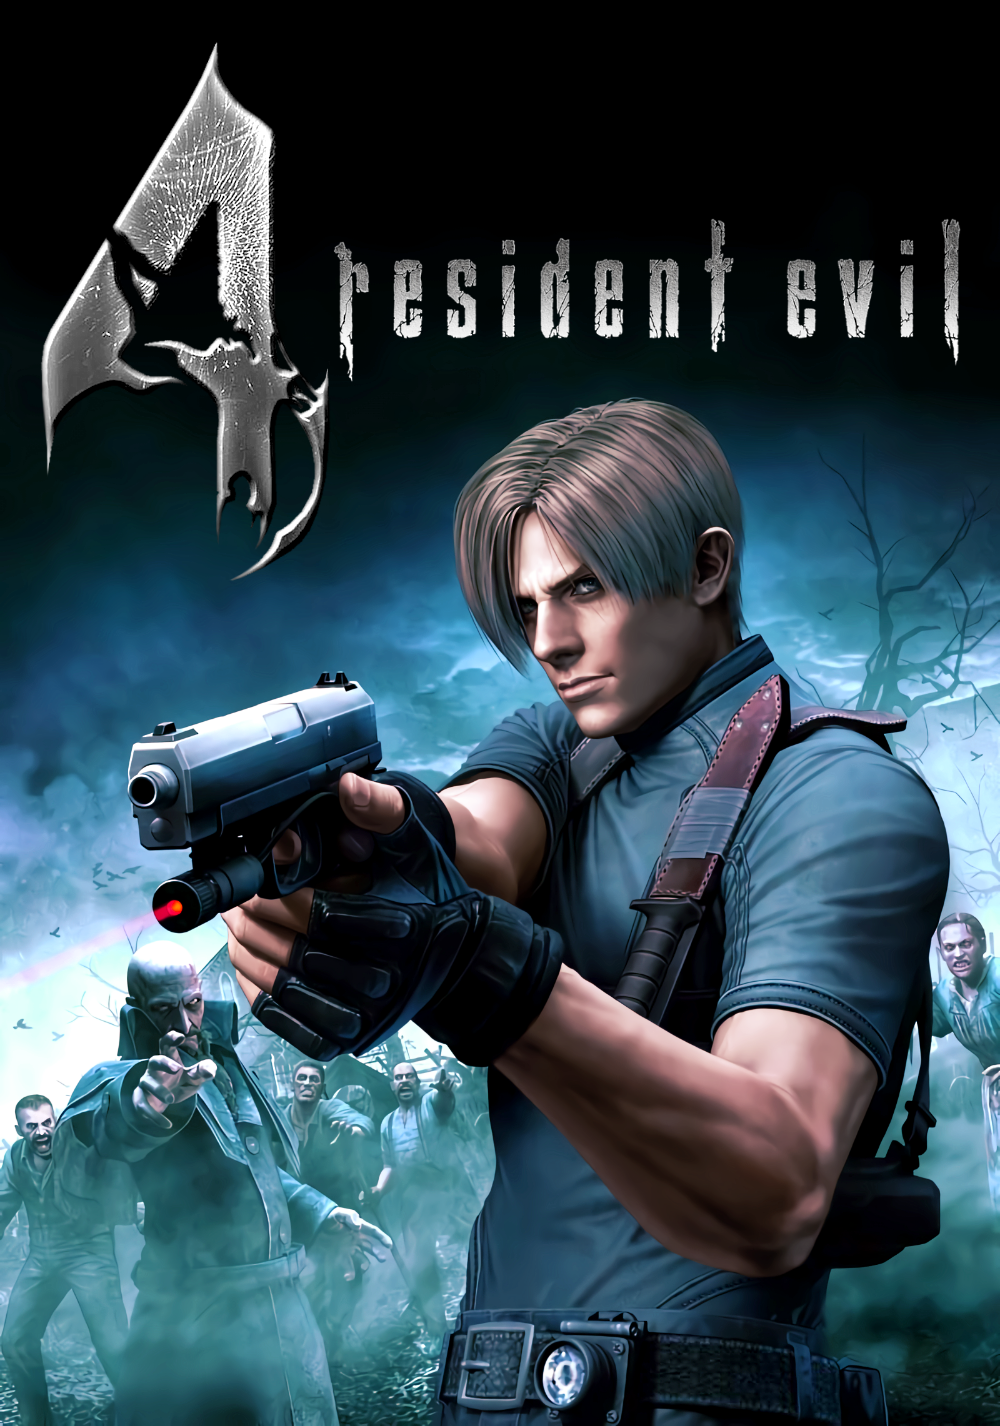 Resident Evil 4 dvd cover ps2 by BayronR on DeviantArt